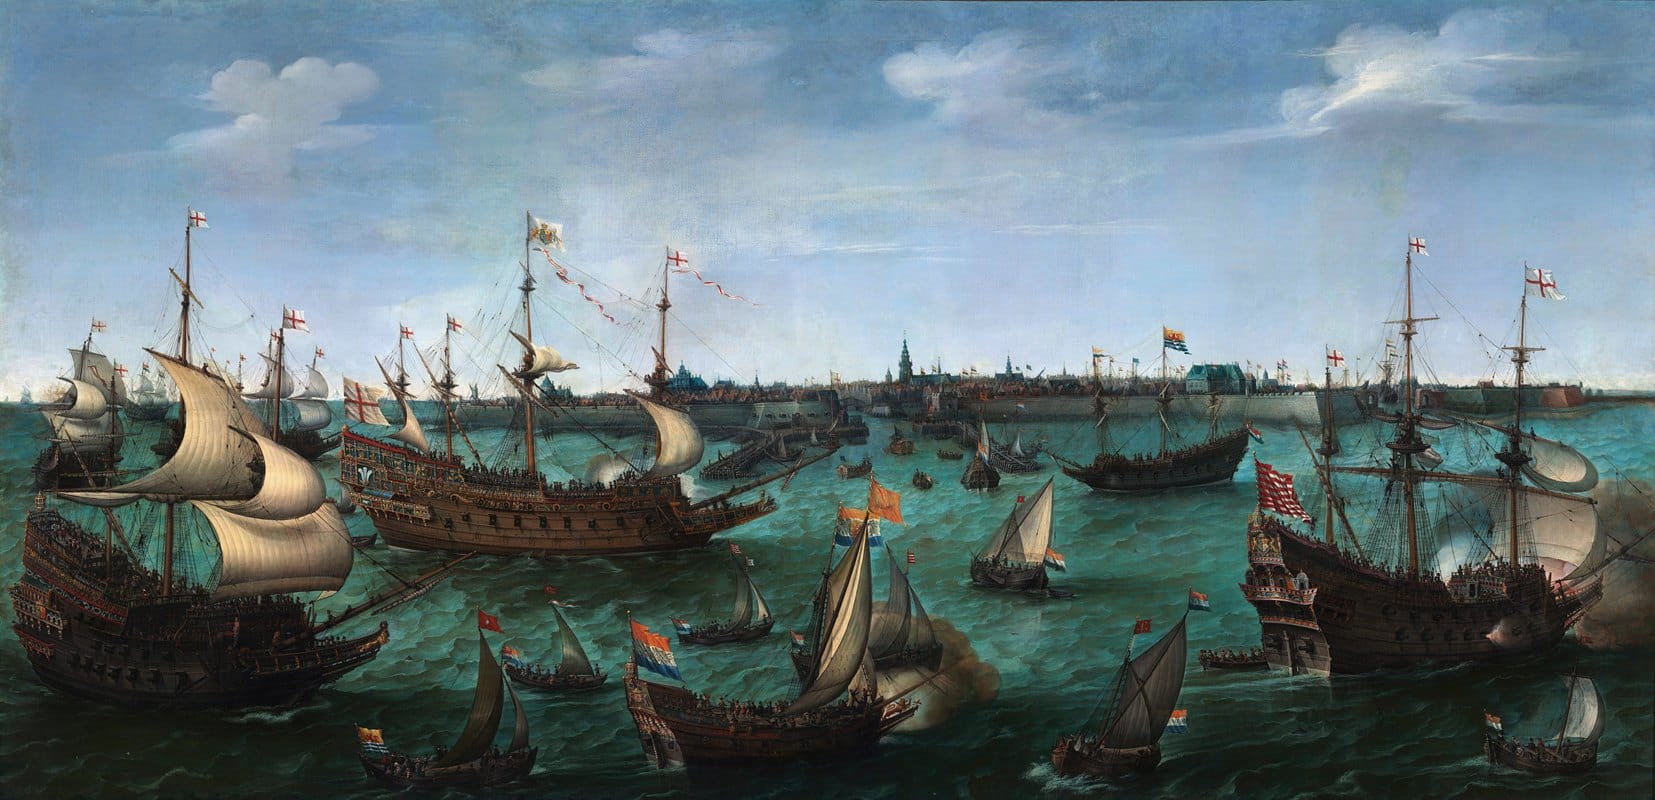 Hendrik Cornelisz. Vroom - The Arrival of the Elector Frederick V of the Palatinate and Elizabeth Stuart in flushing on 29 April